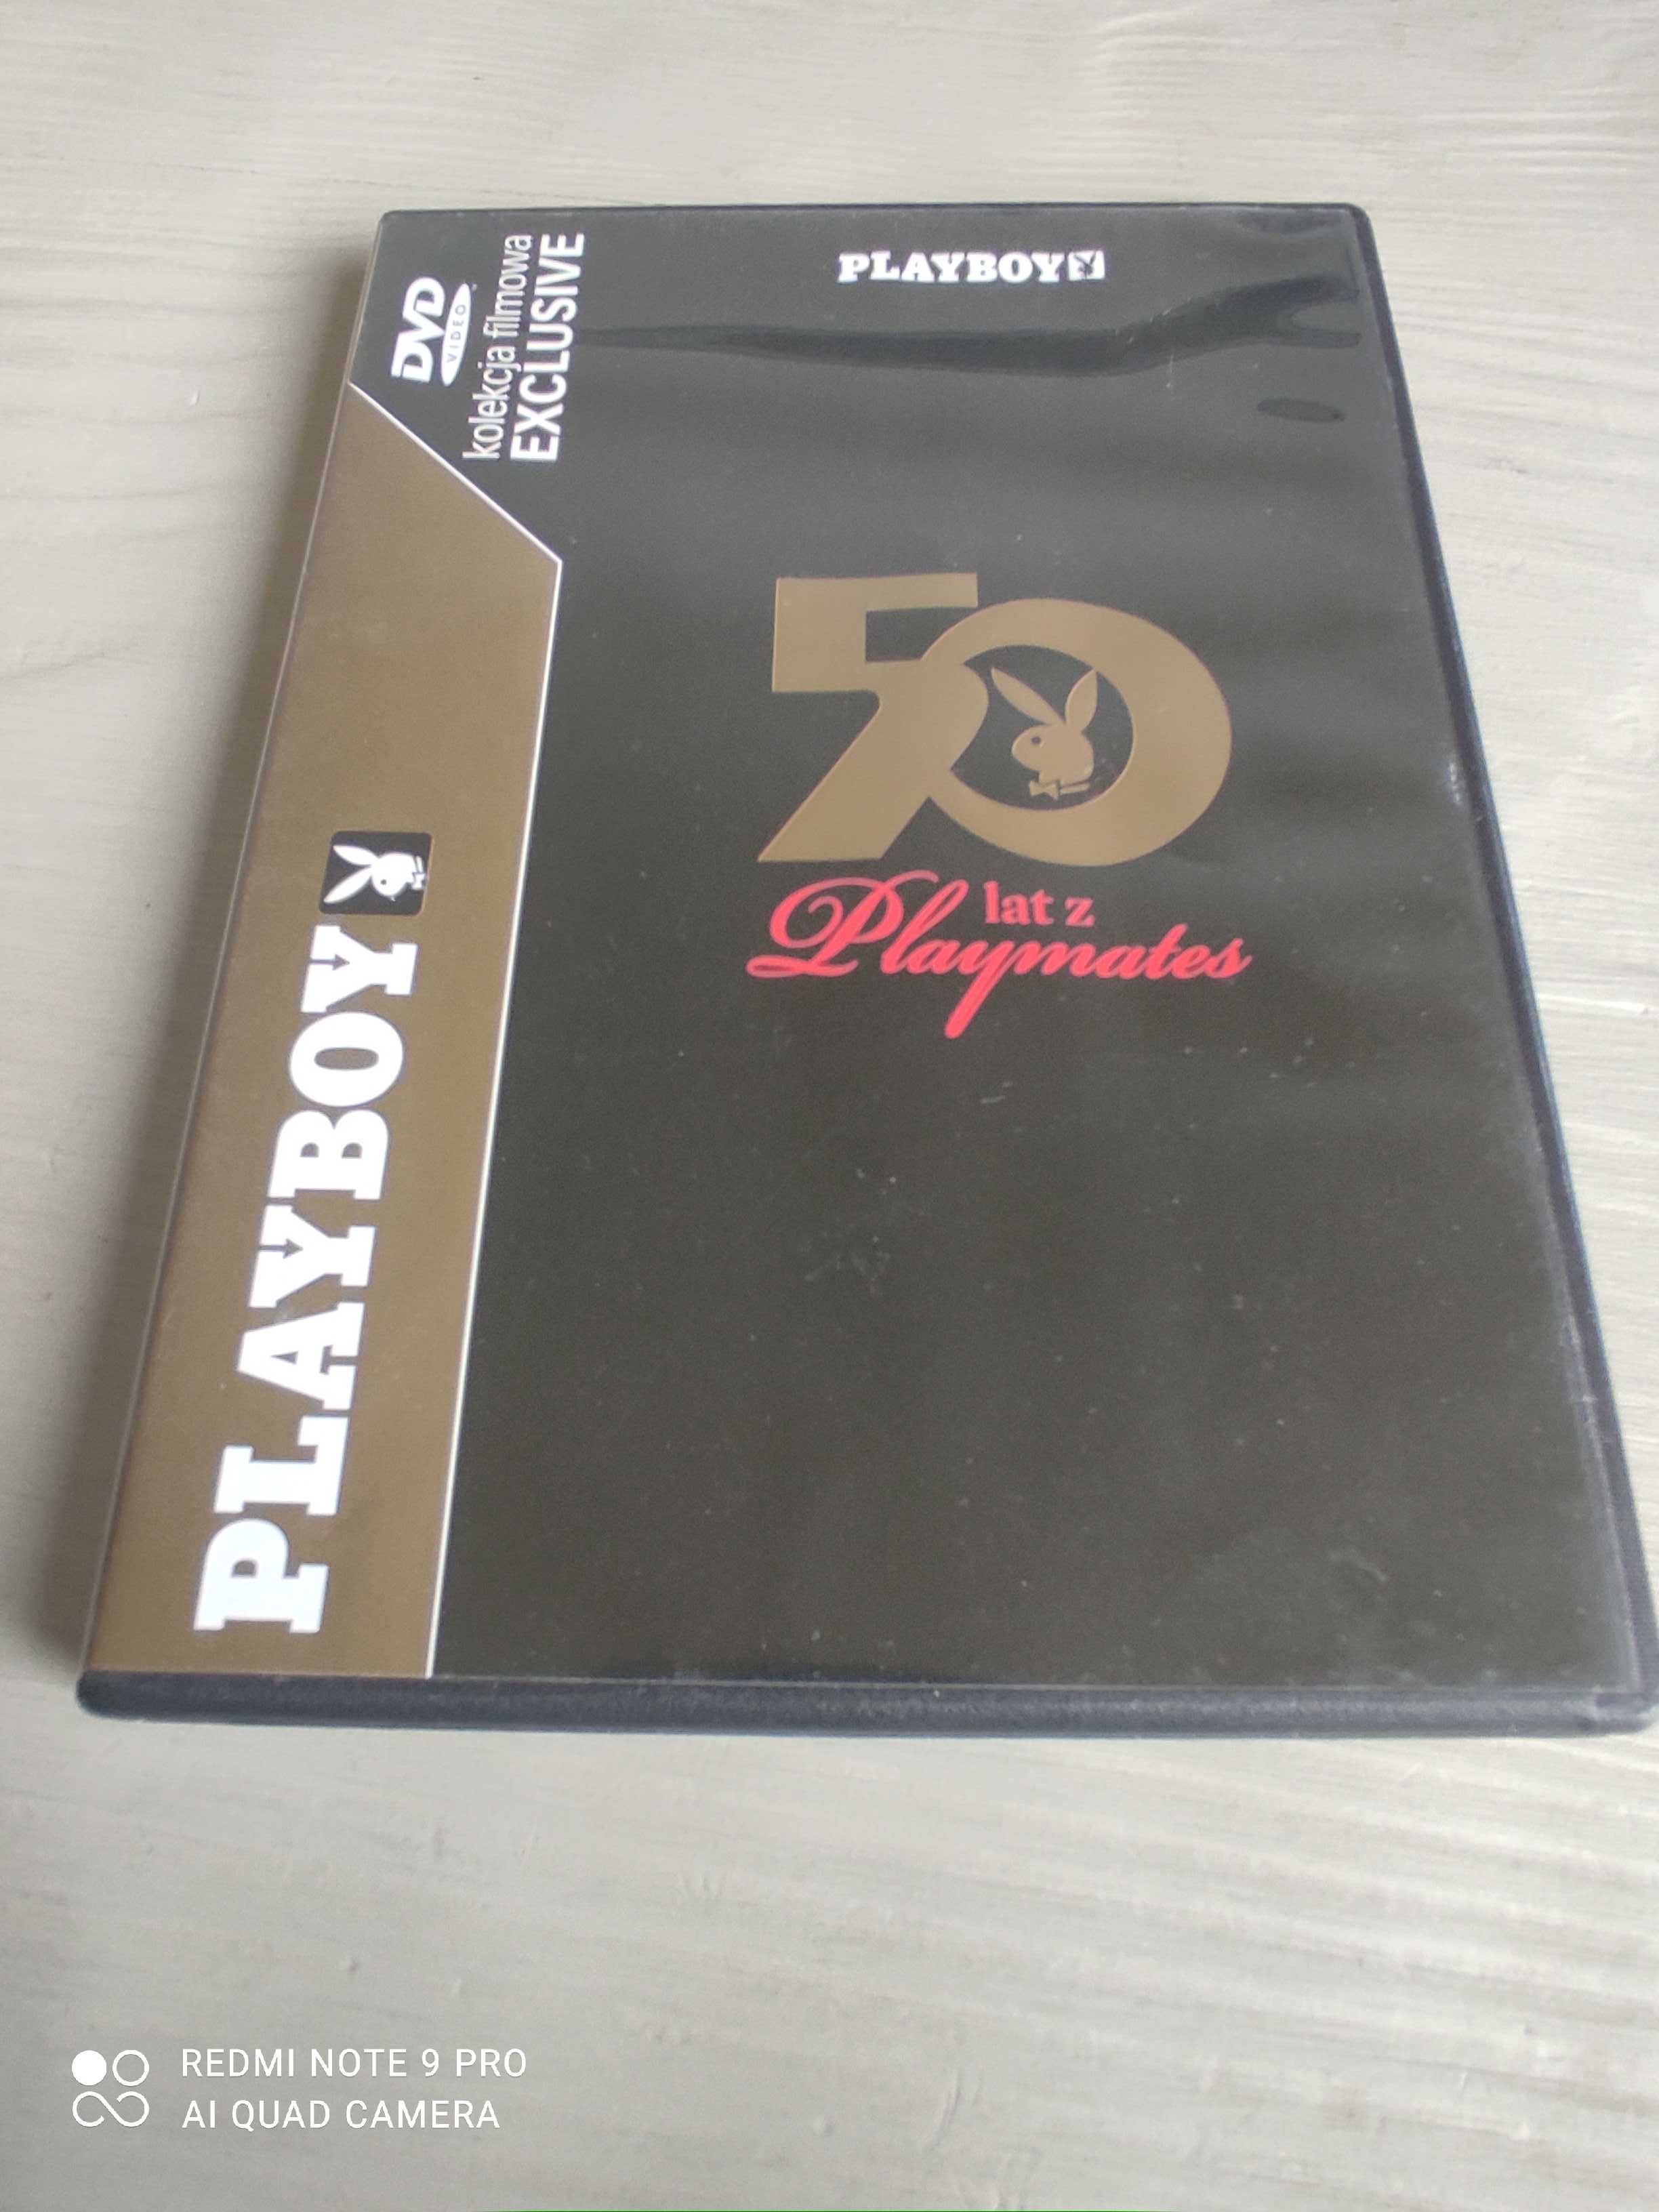 Playboy - 50 lat z Playmates - film DVD